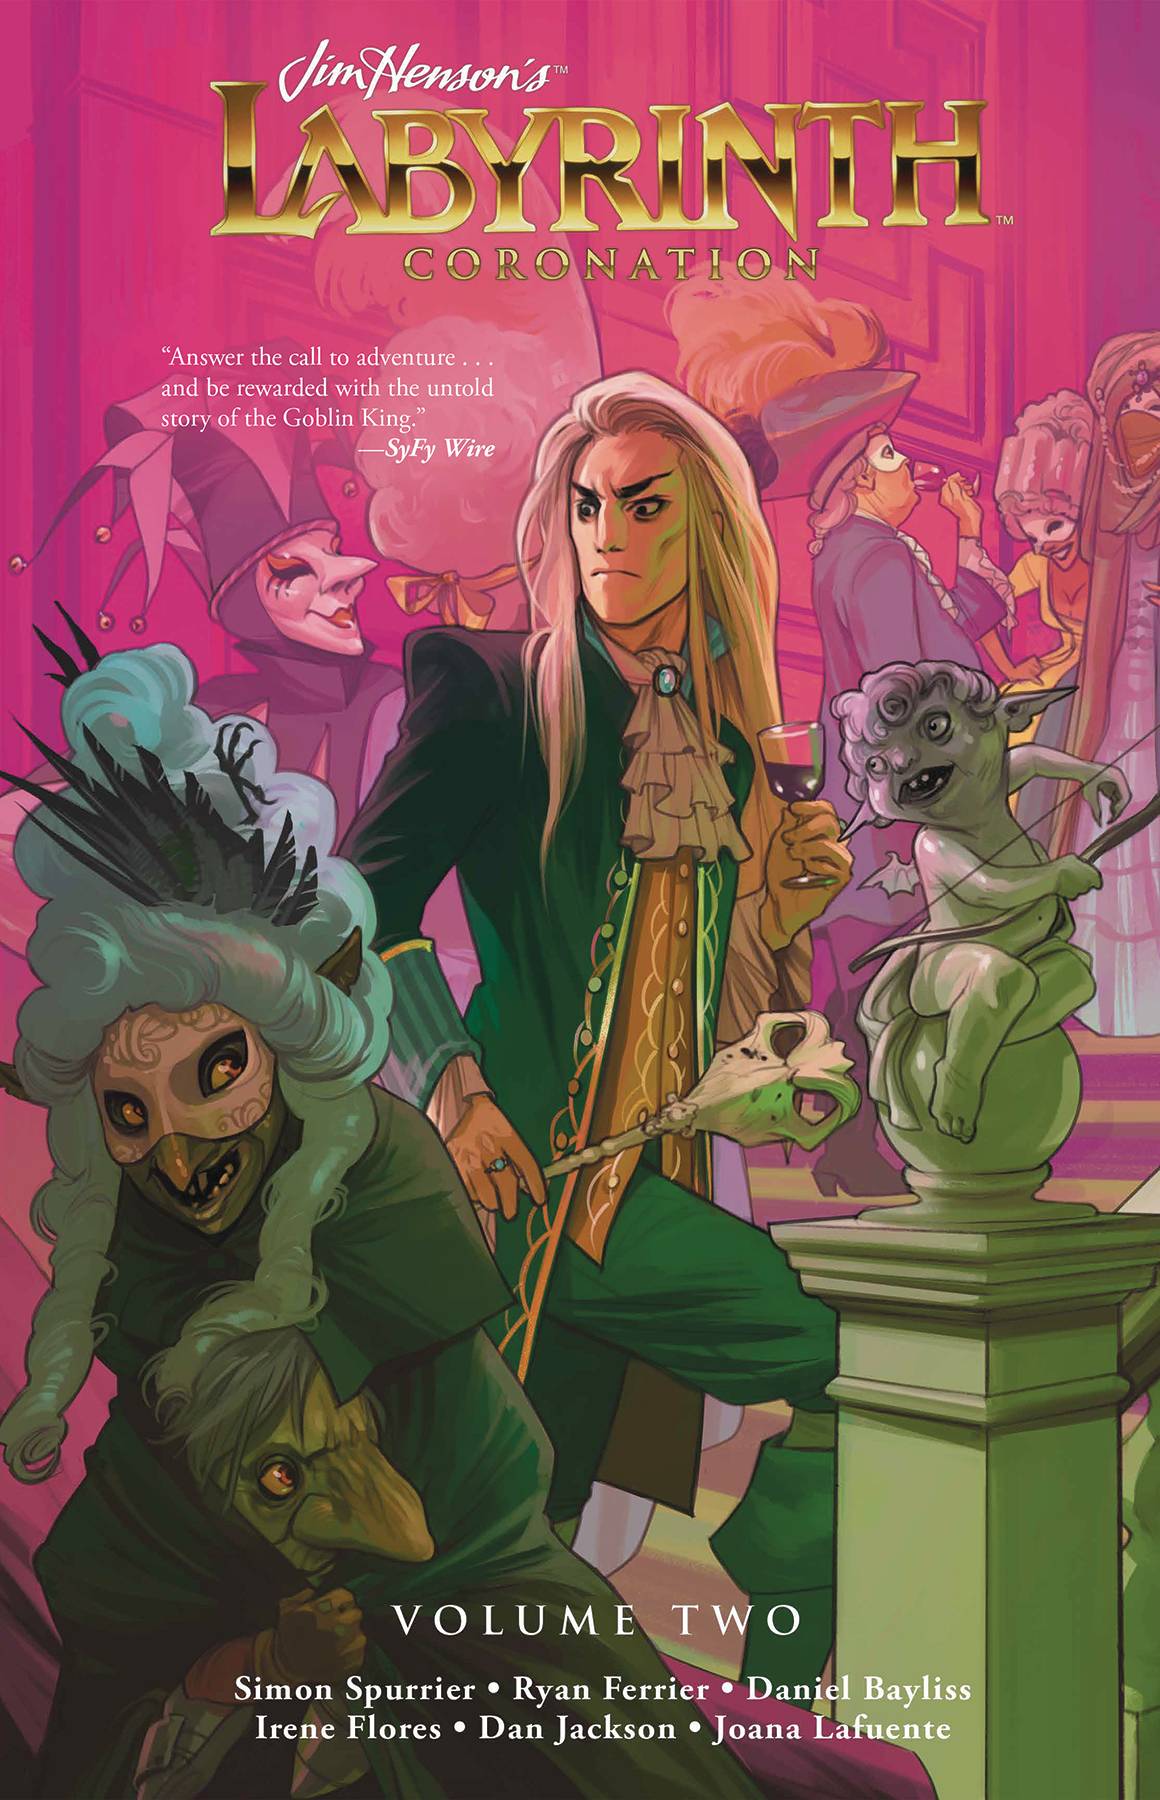 Jim Henson Labyrinth Coronation Hardcover Volume 2